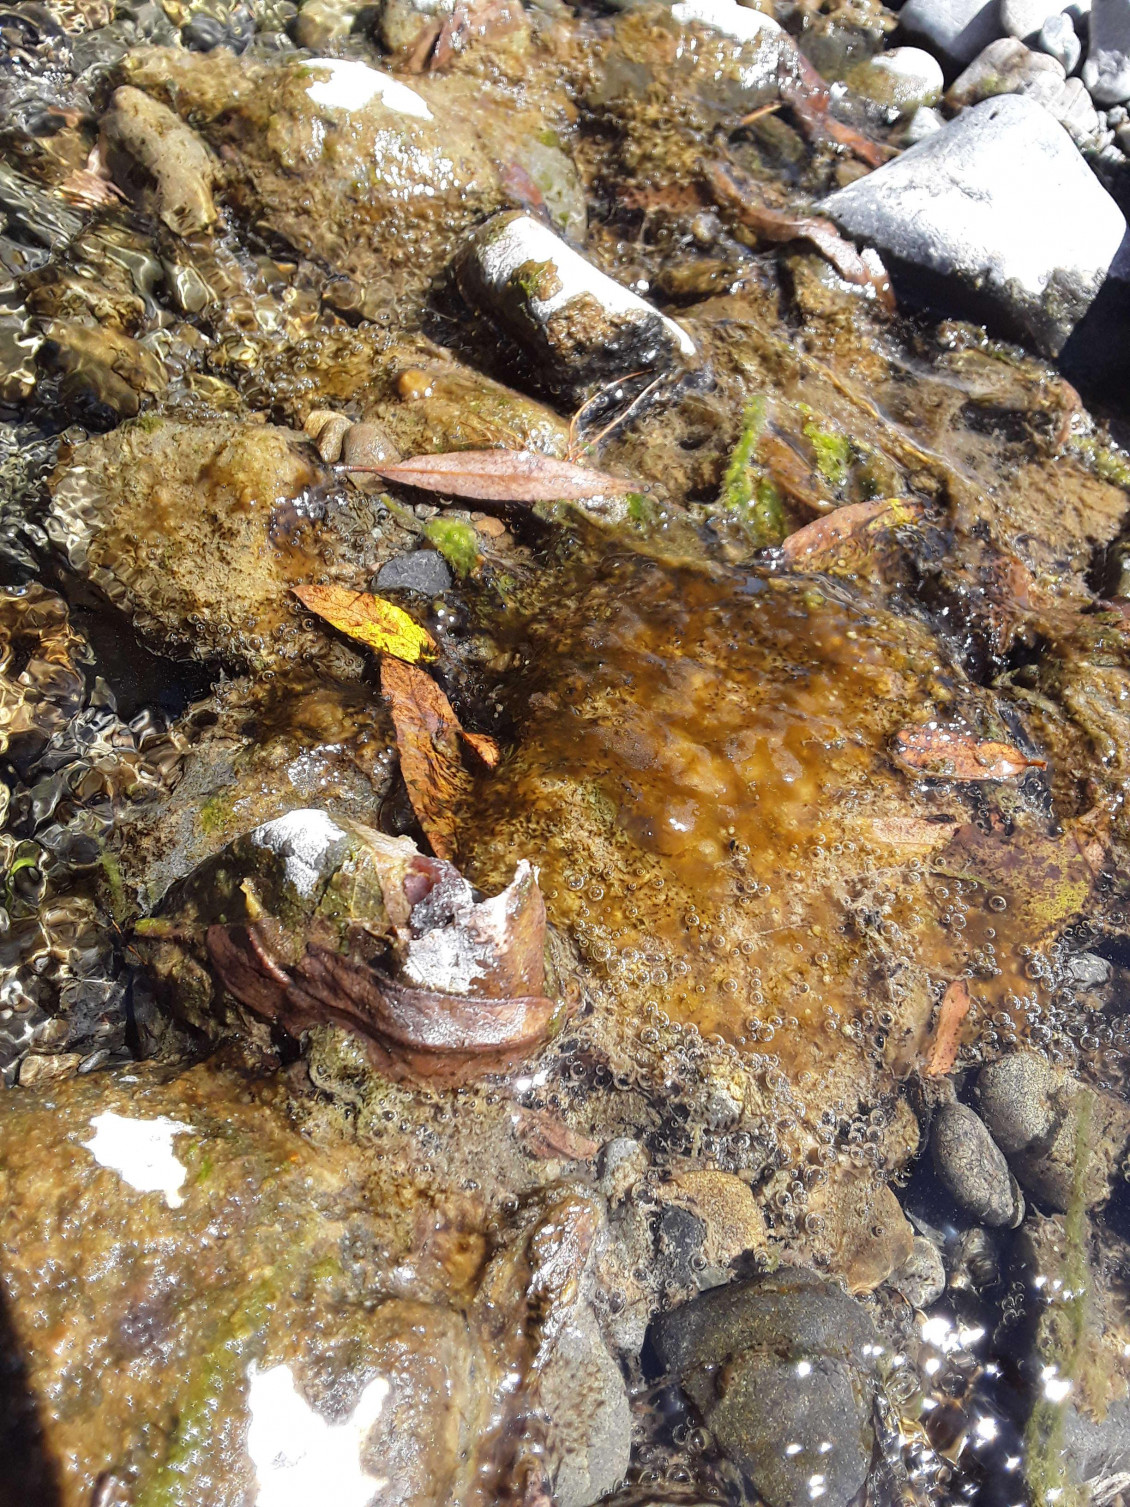 Toxic algae in the Waikanae River at Jim Cooke Park